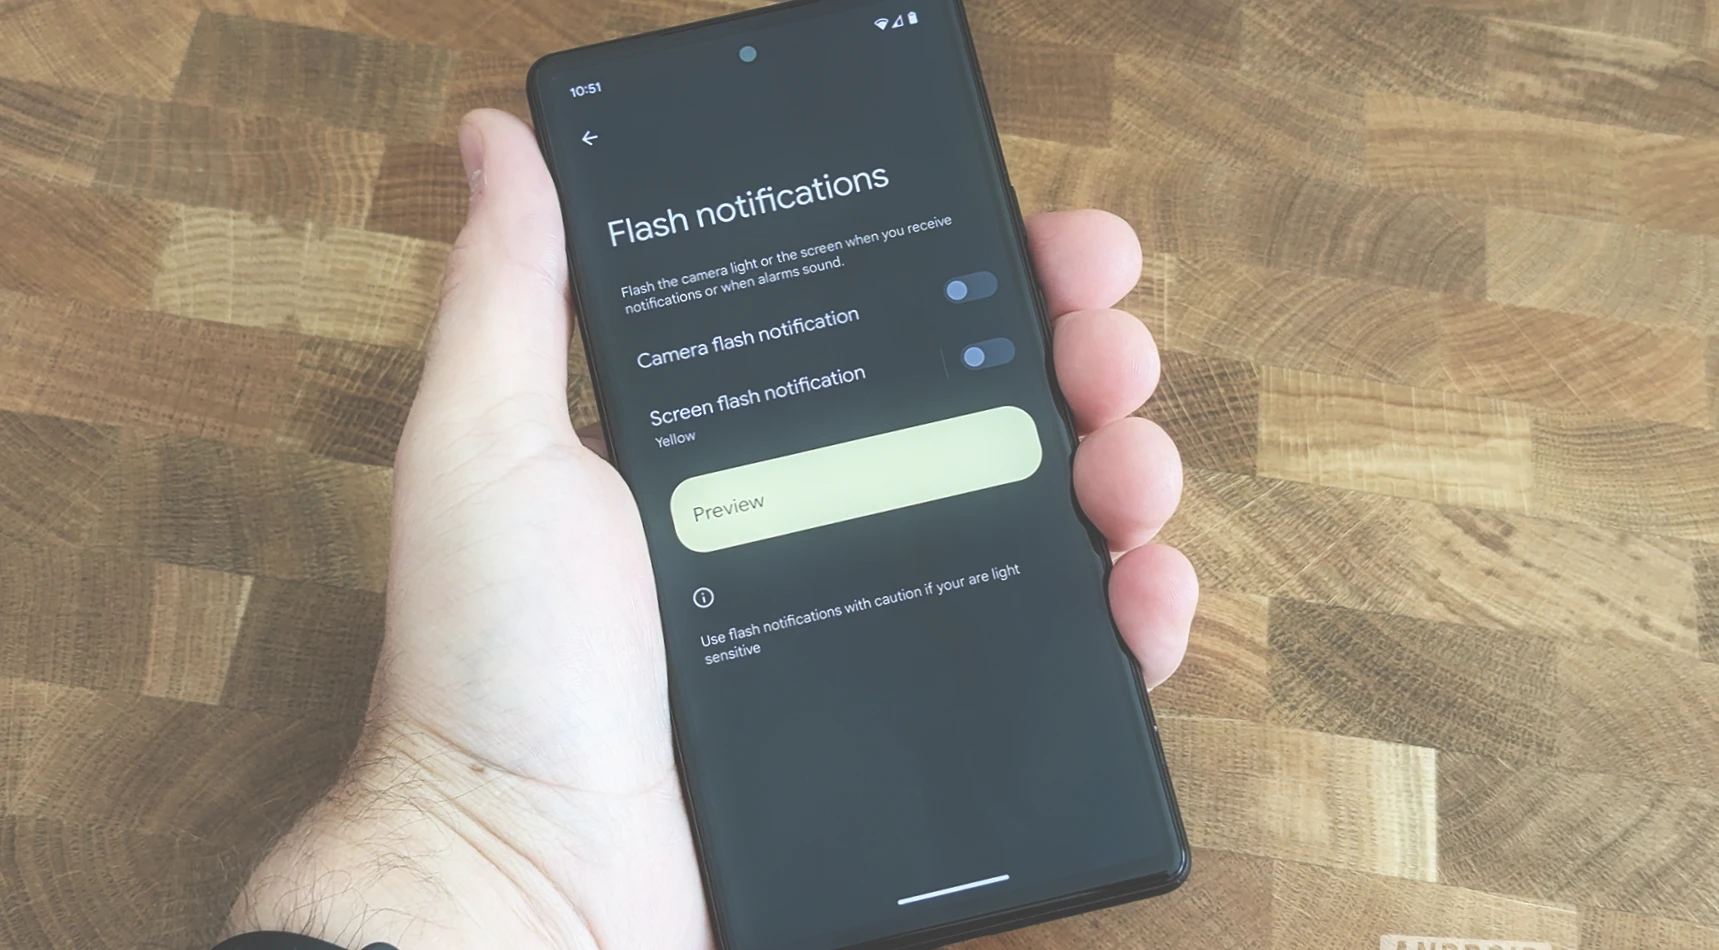 Android flash notifications menu